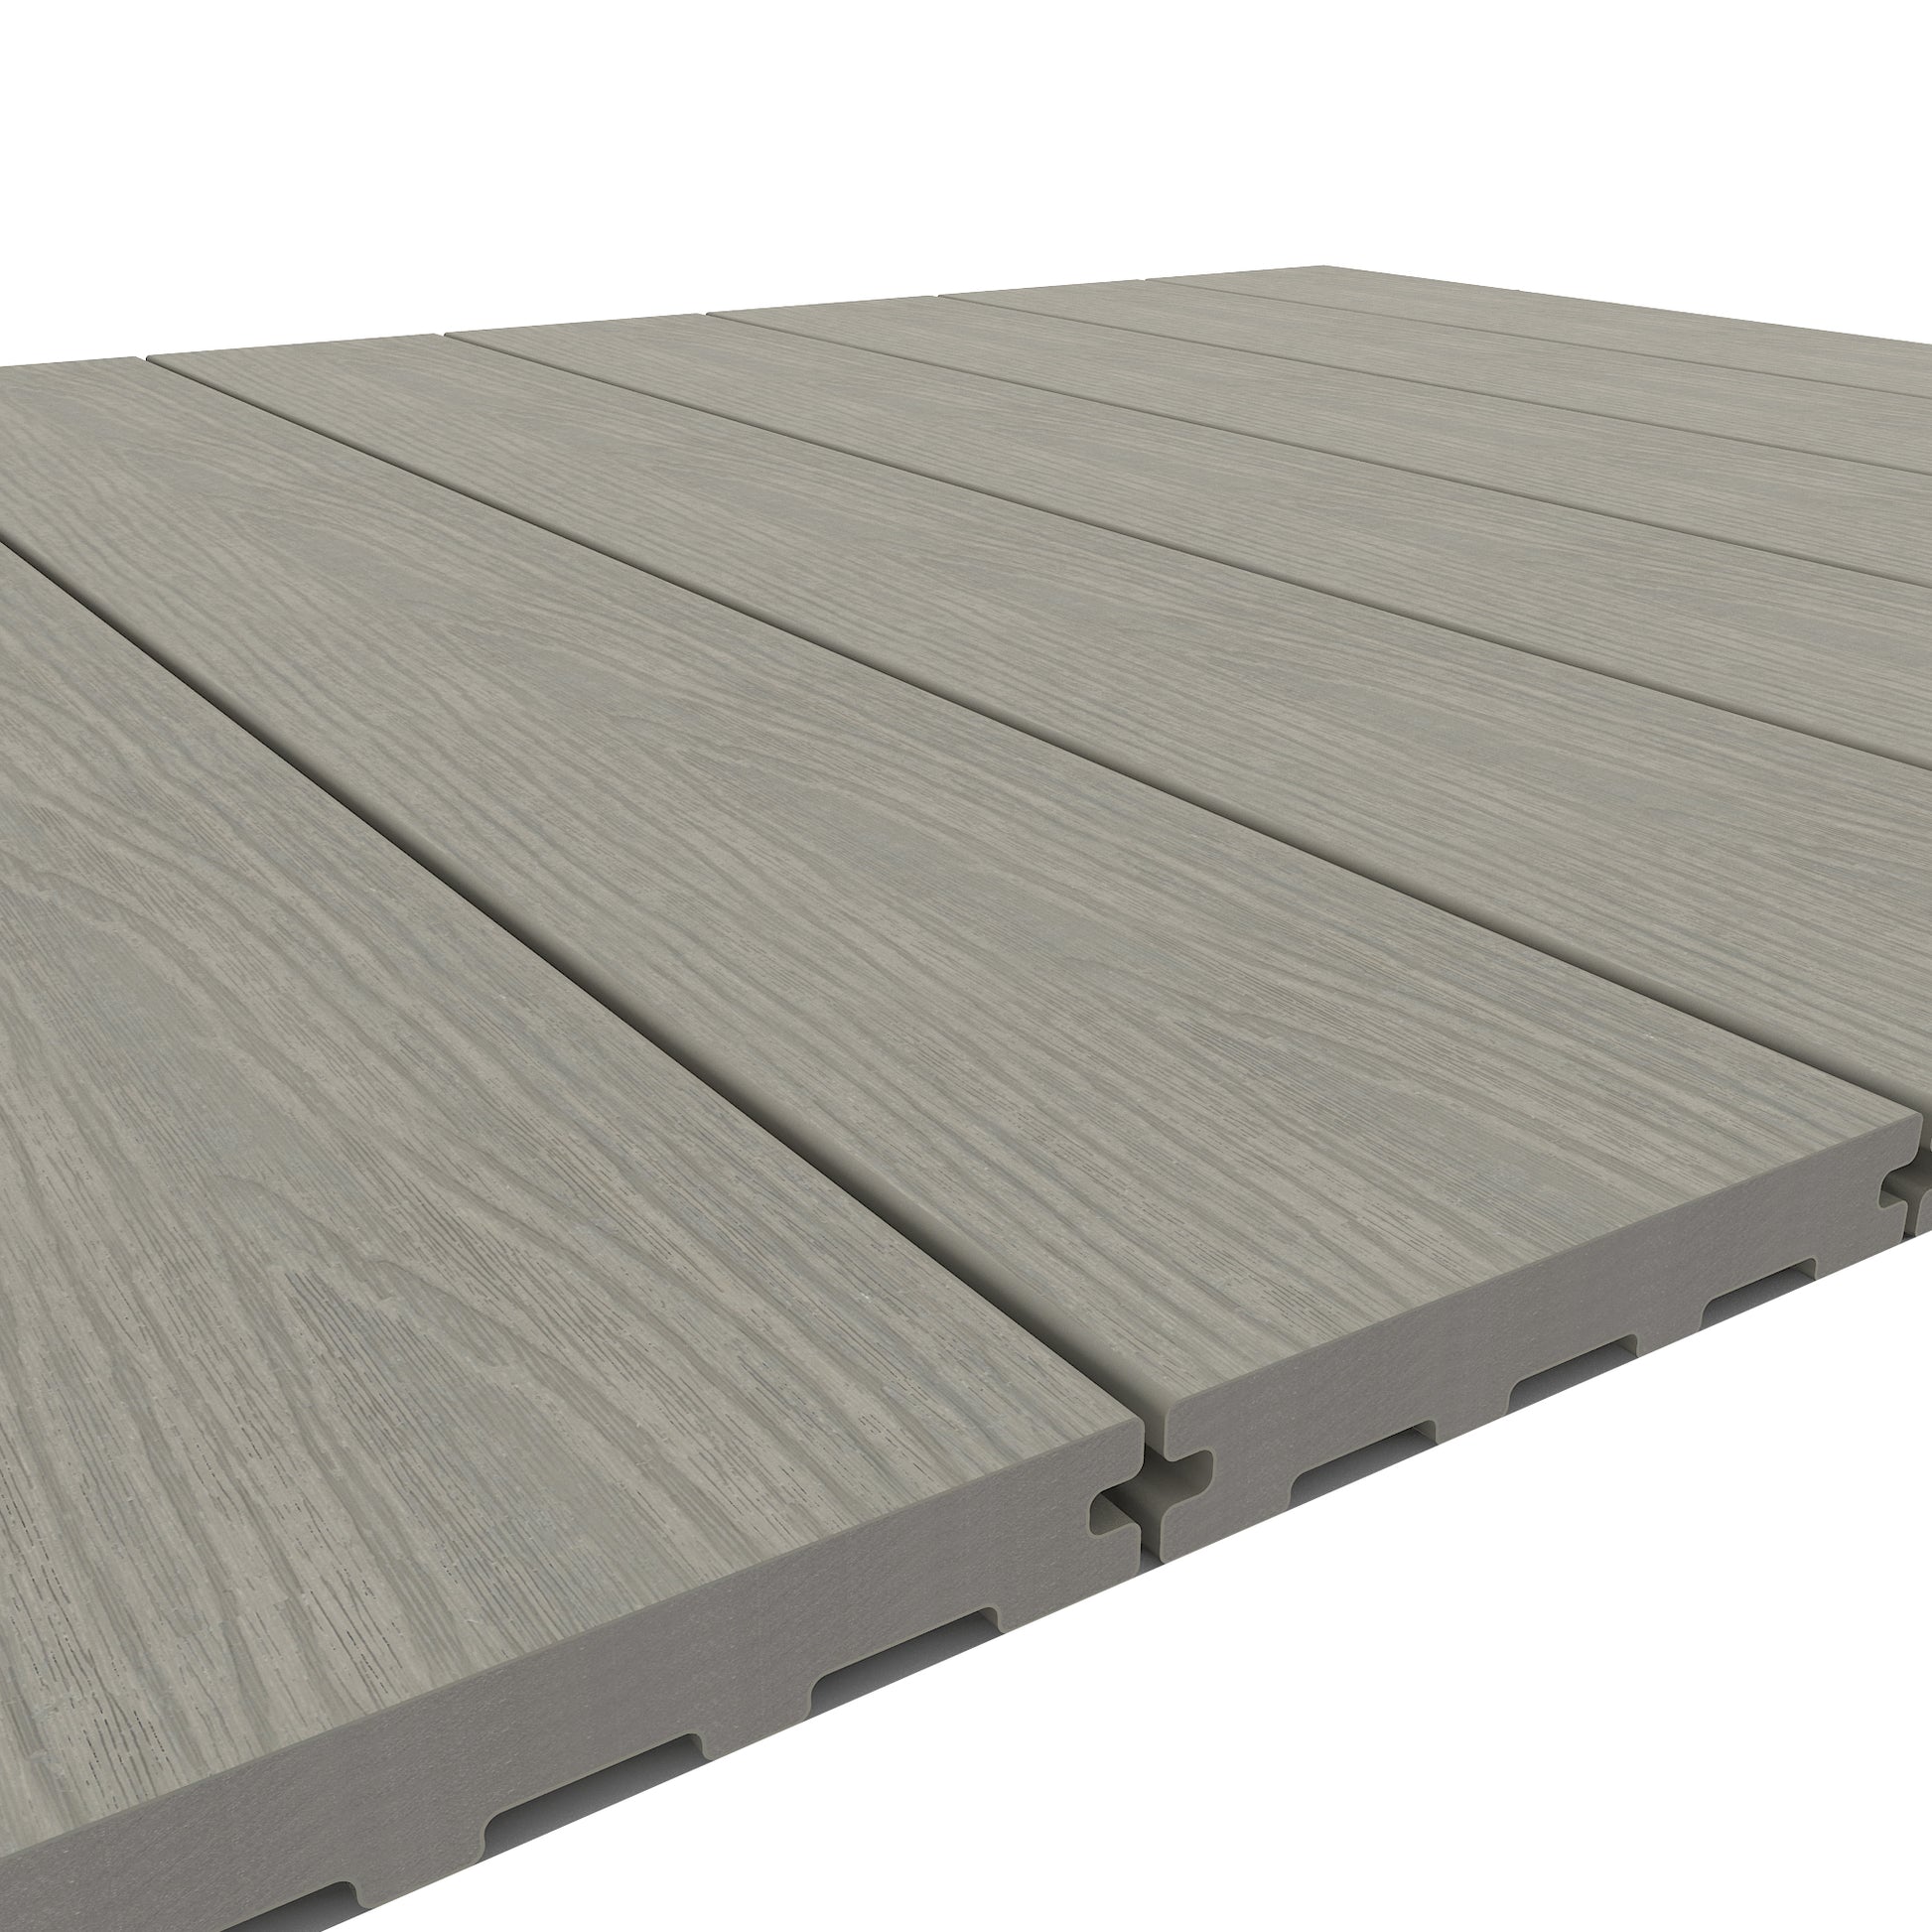 Ultrashield Naturale Solid Composite Deck Boards Antique Grey